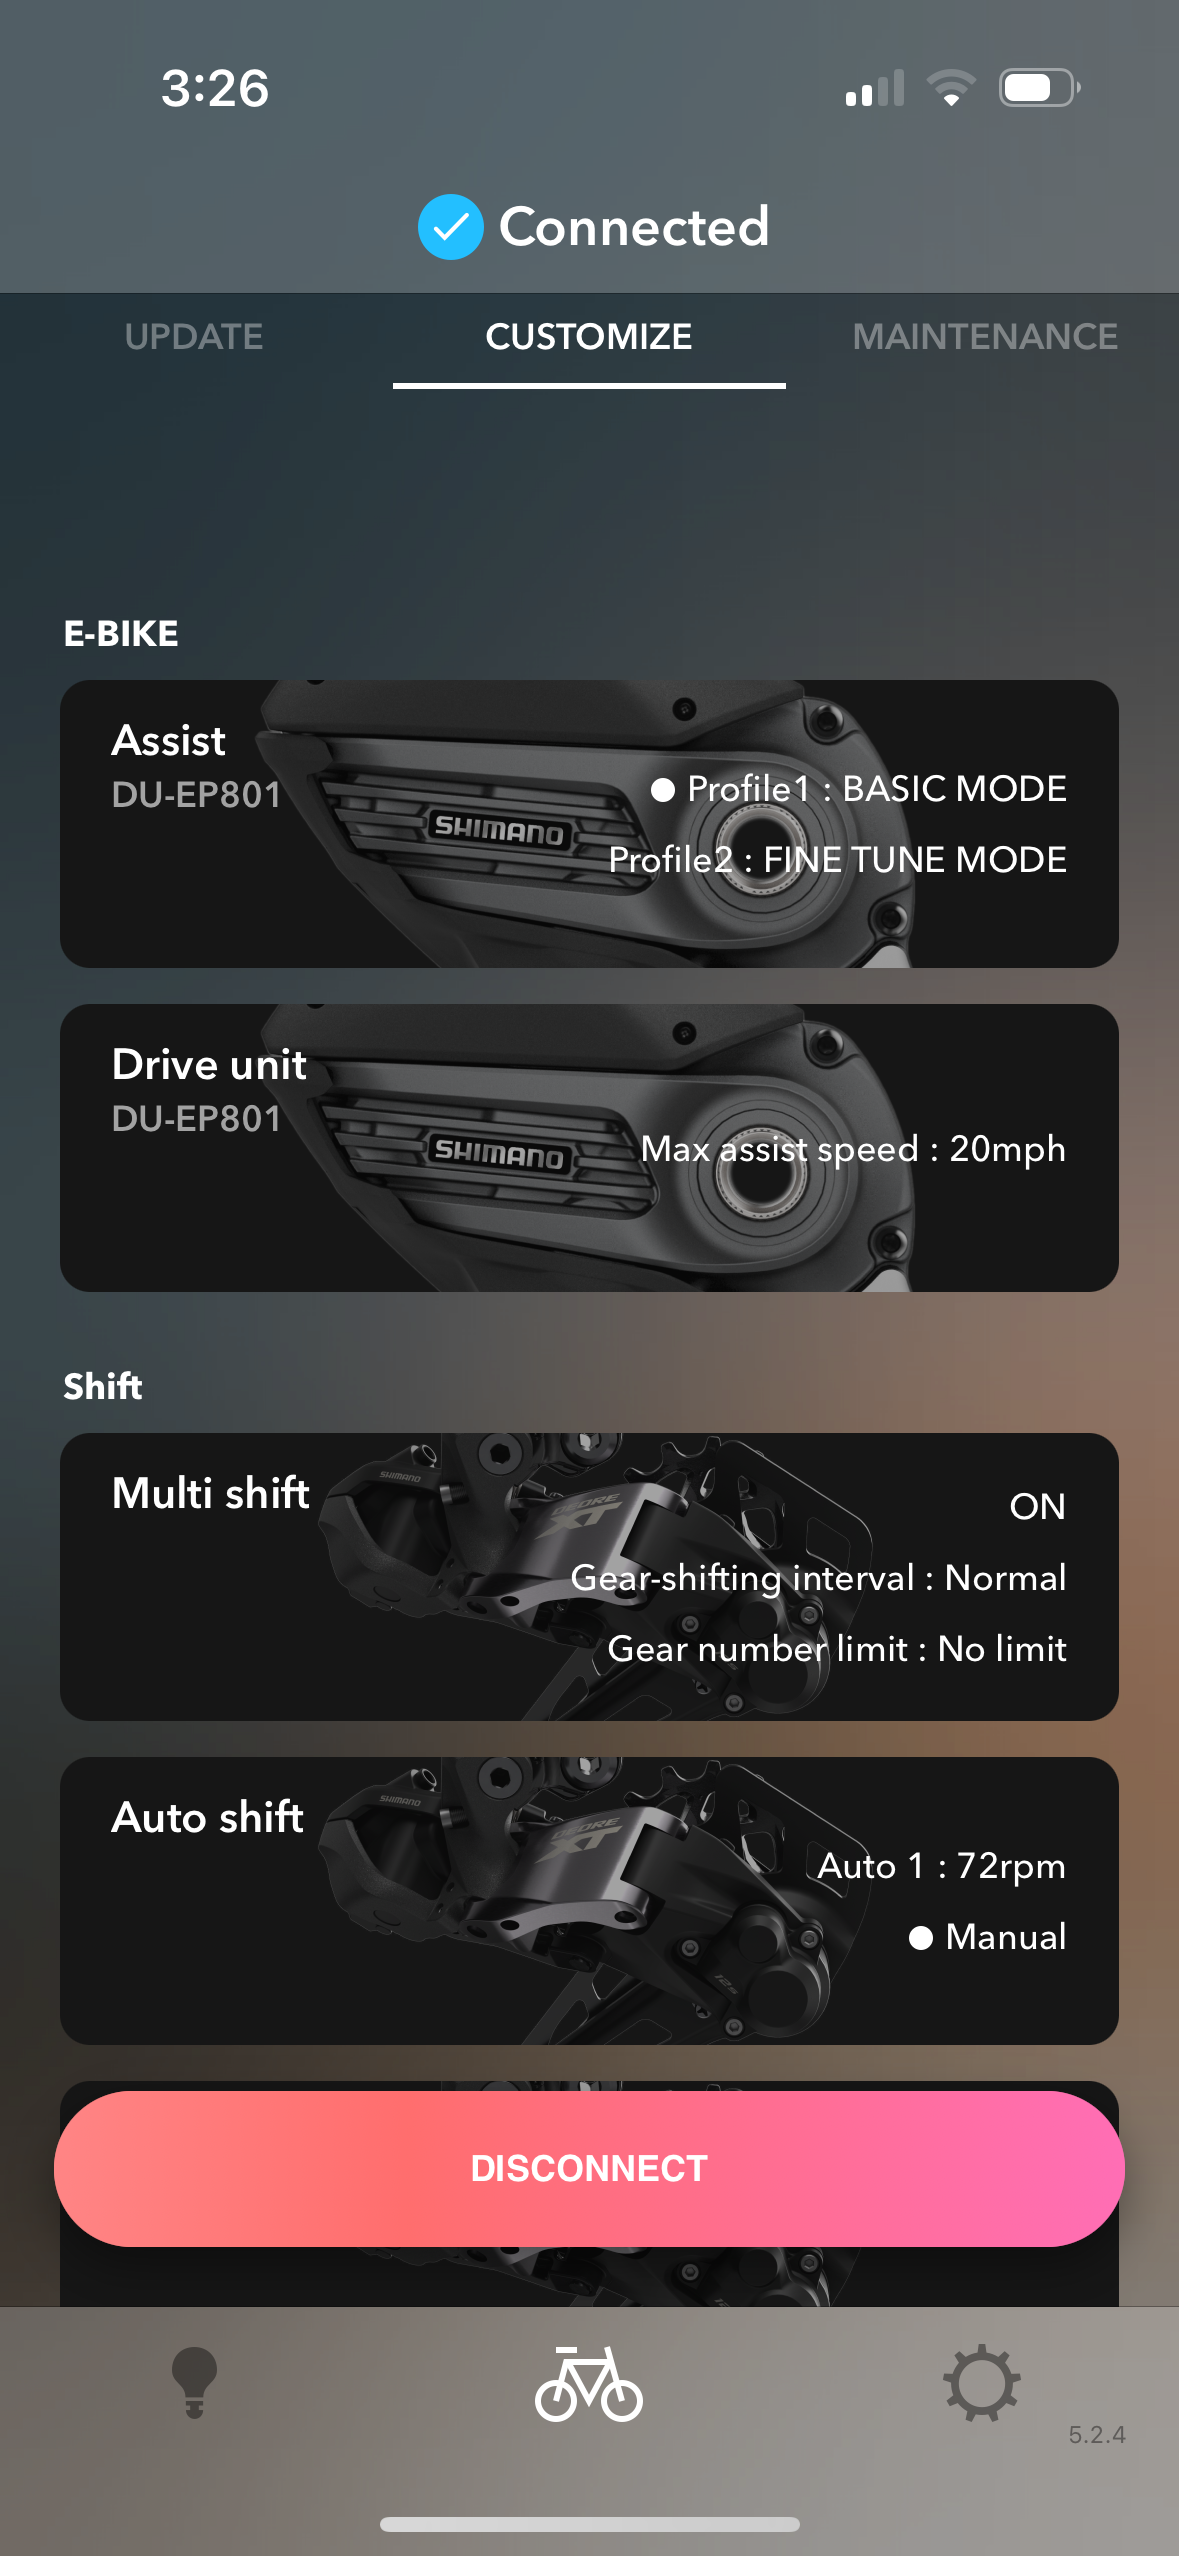 Shimano App detail screen